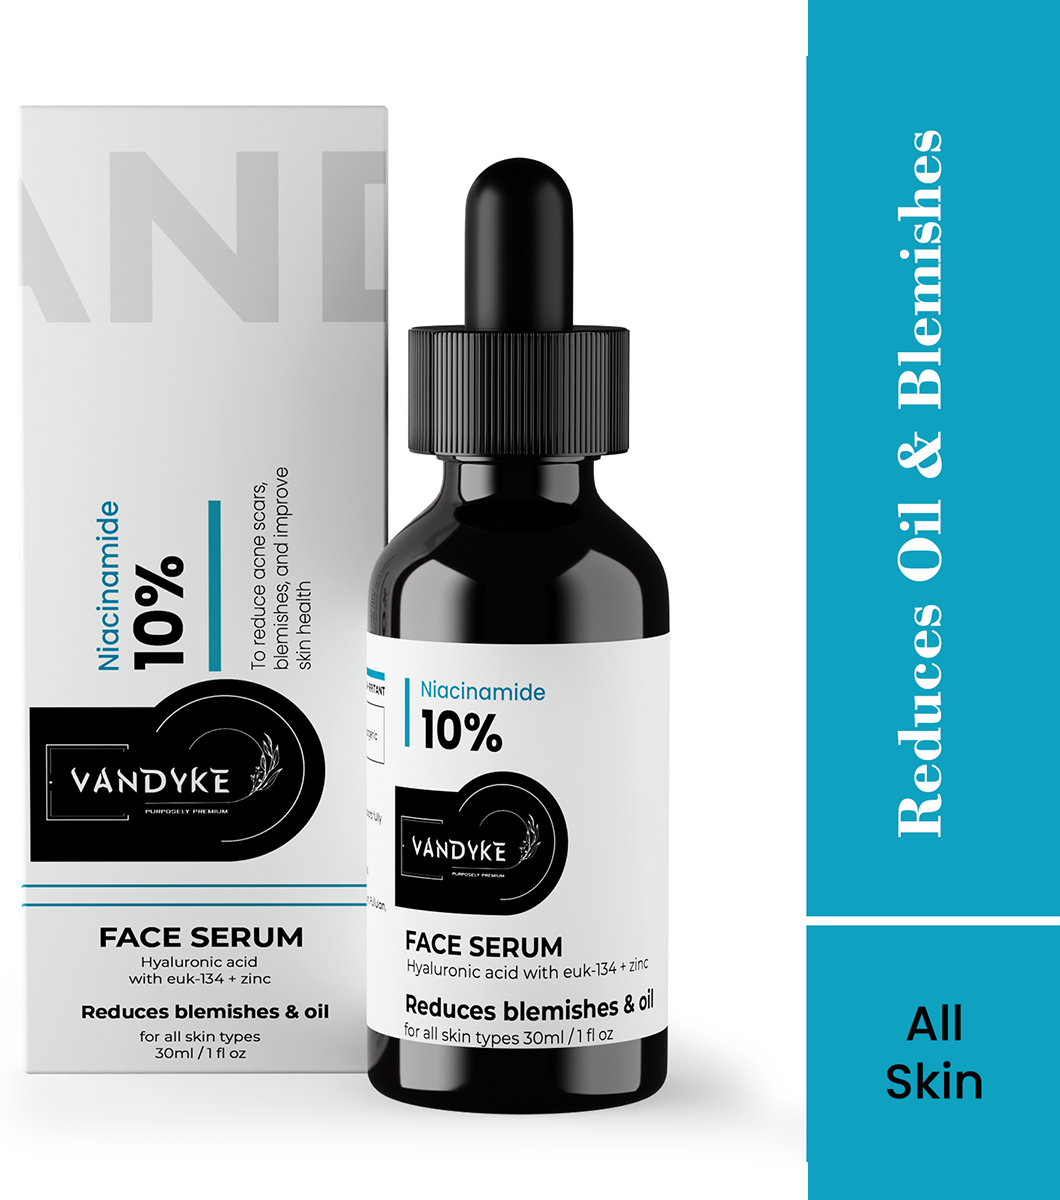 Niacinamide 10% Face Serum - Vandyke